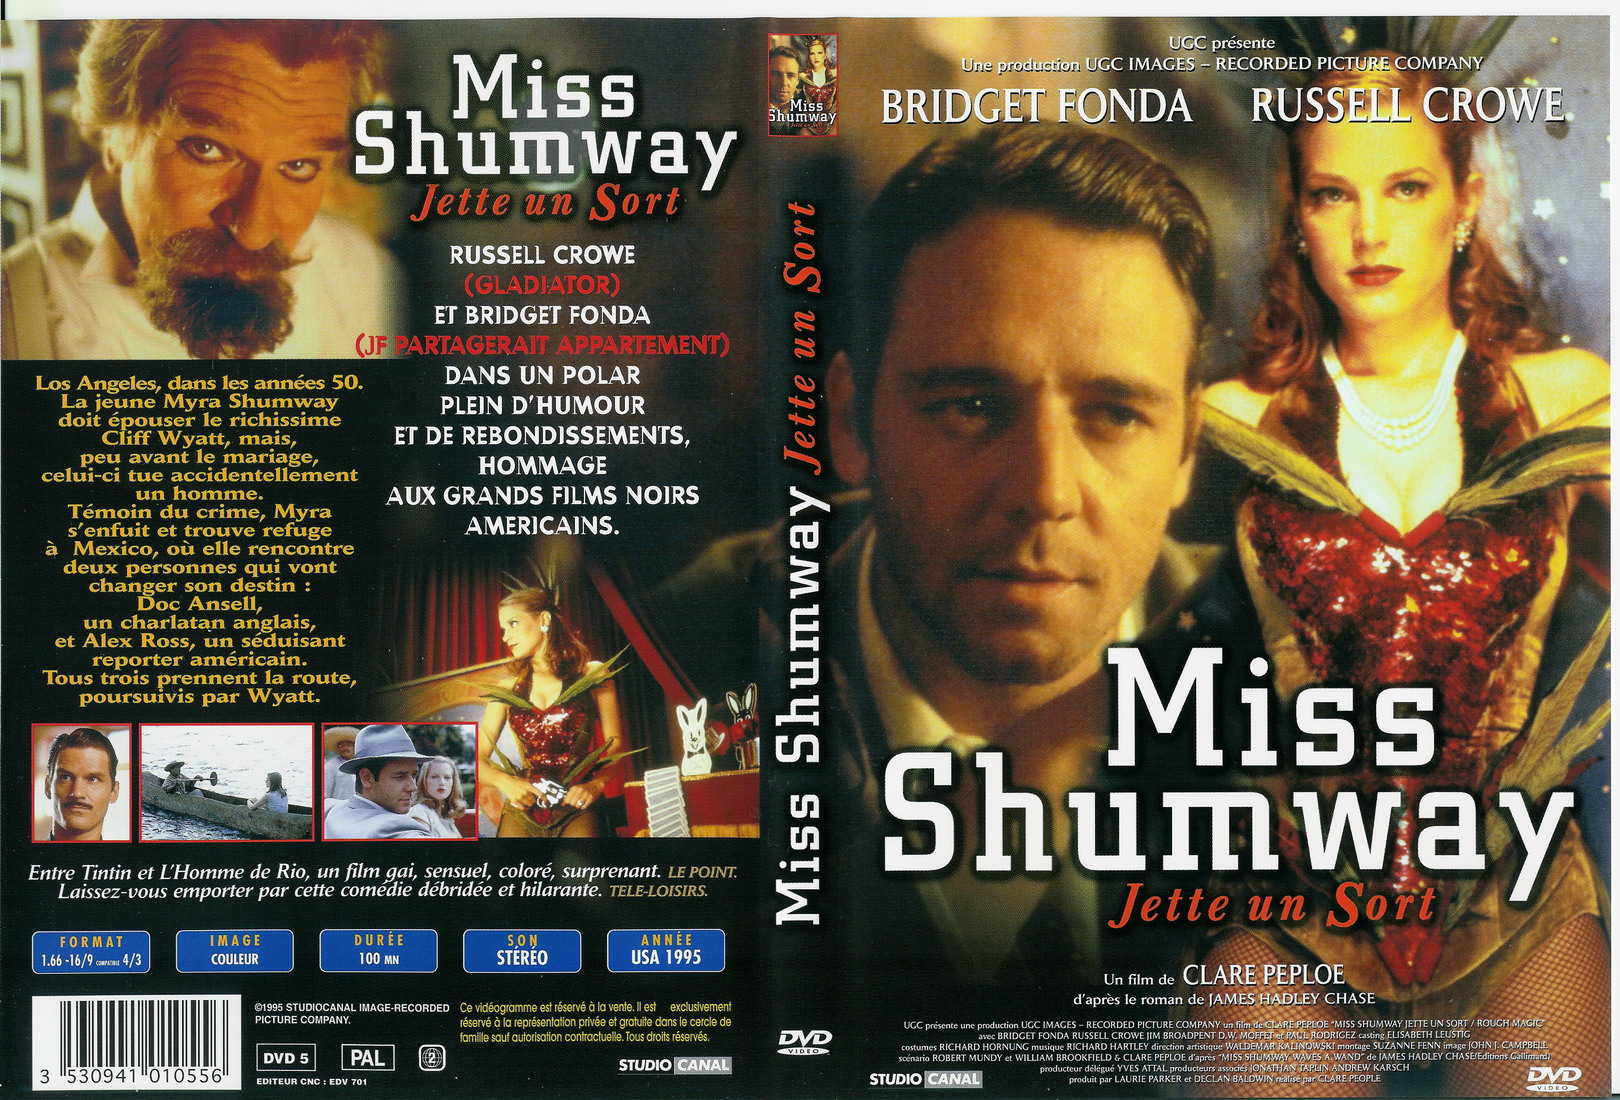 Jaquette DVD Miss Shunway jette un sort